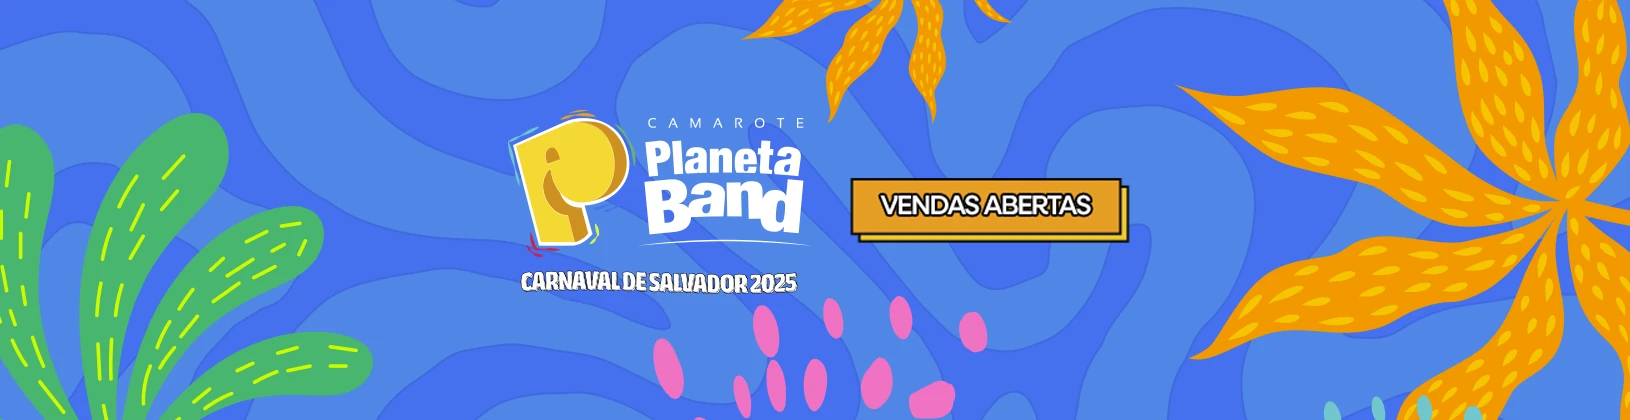 Planeta Band